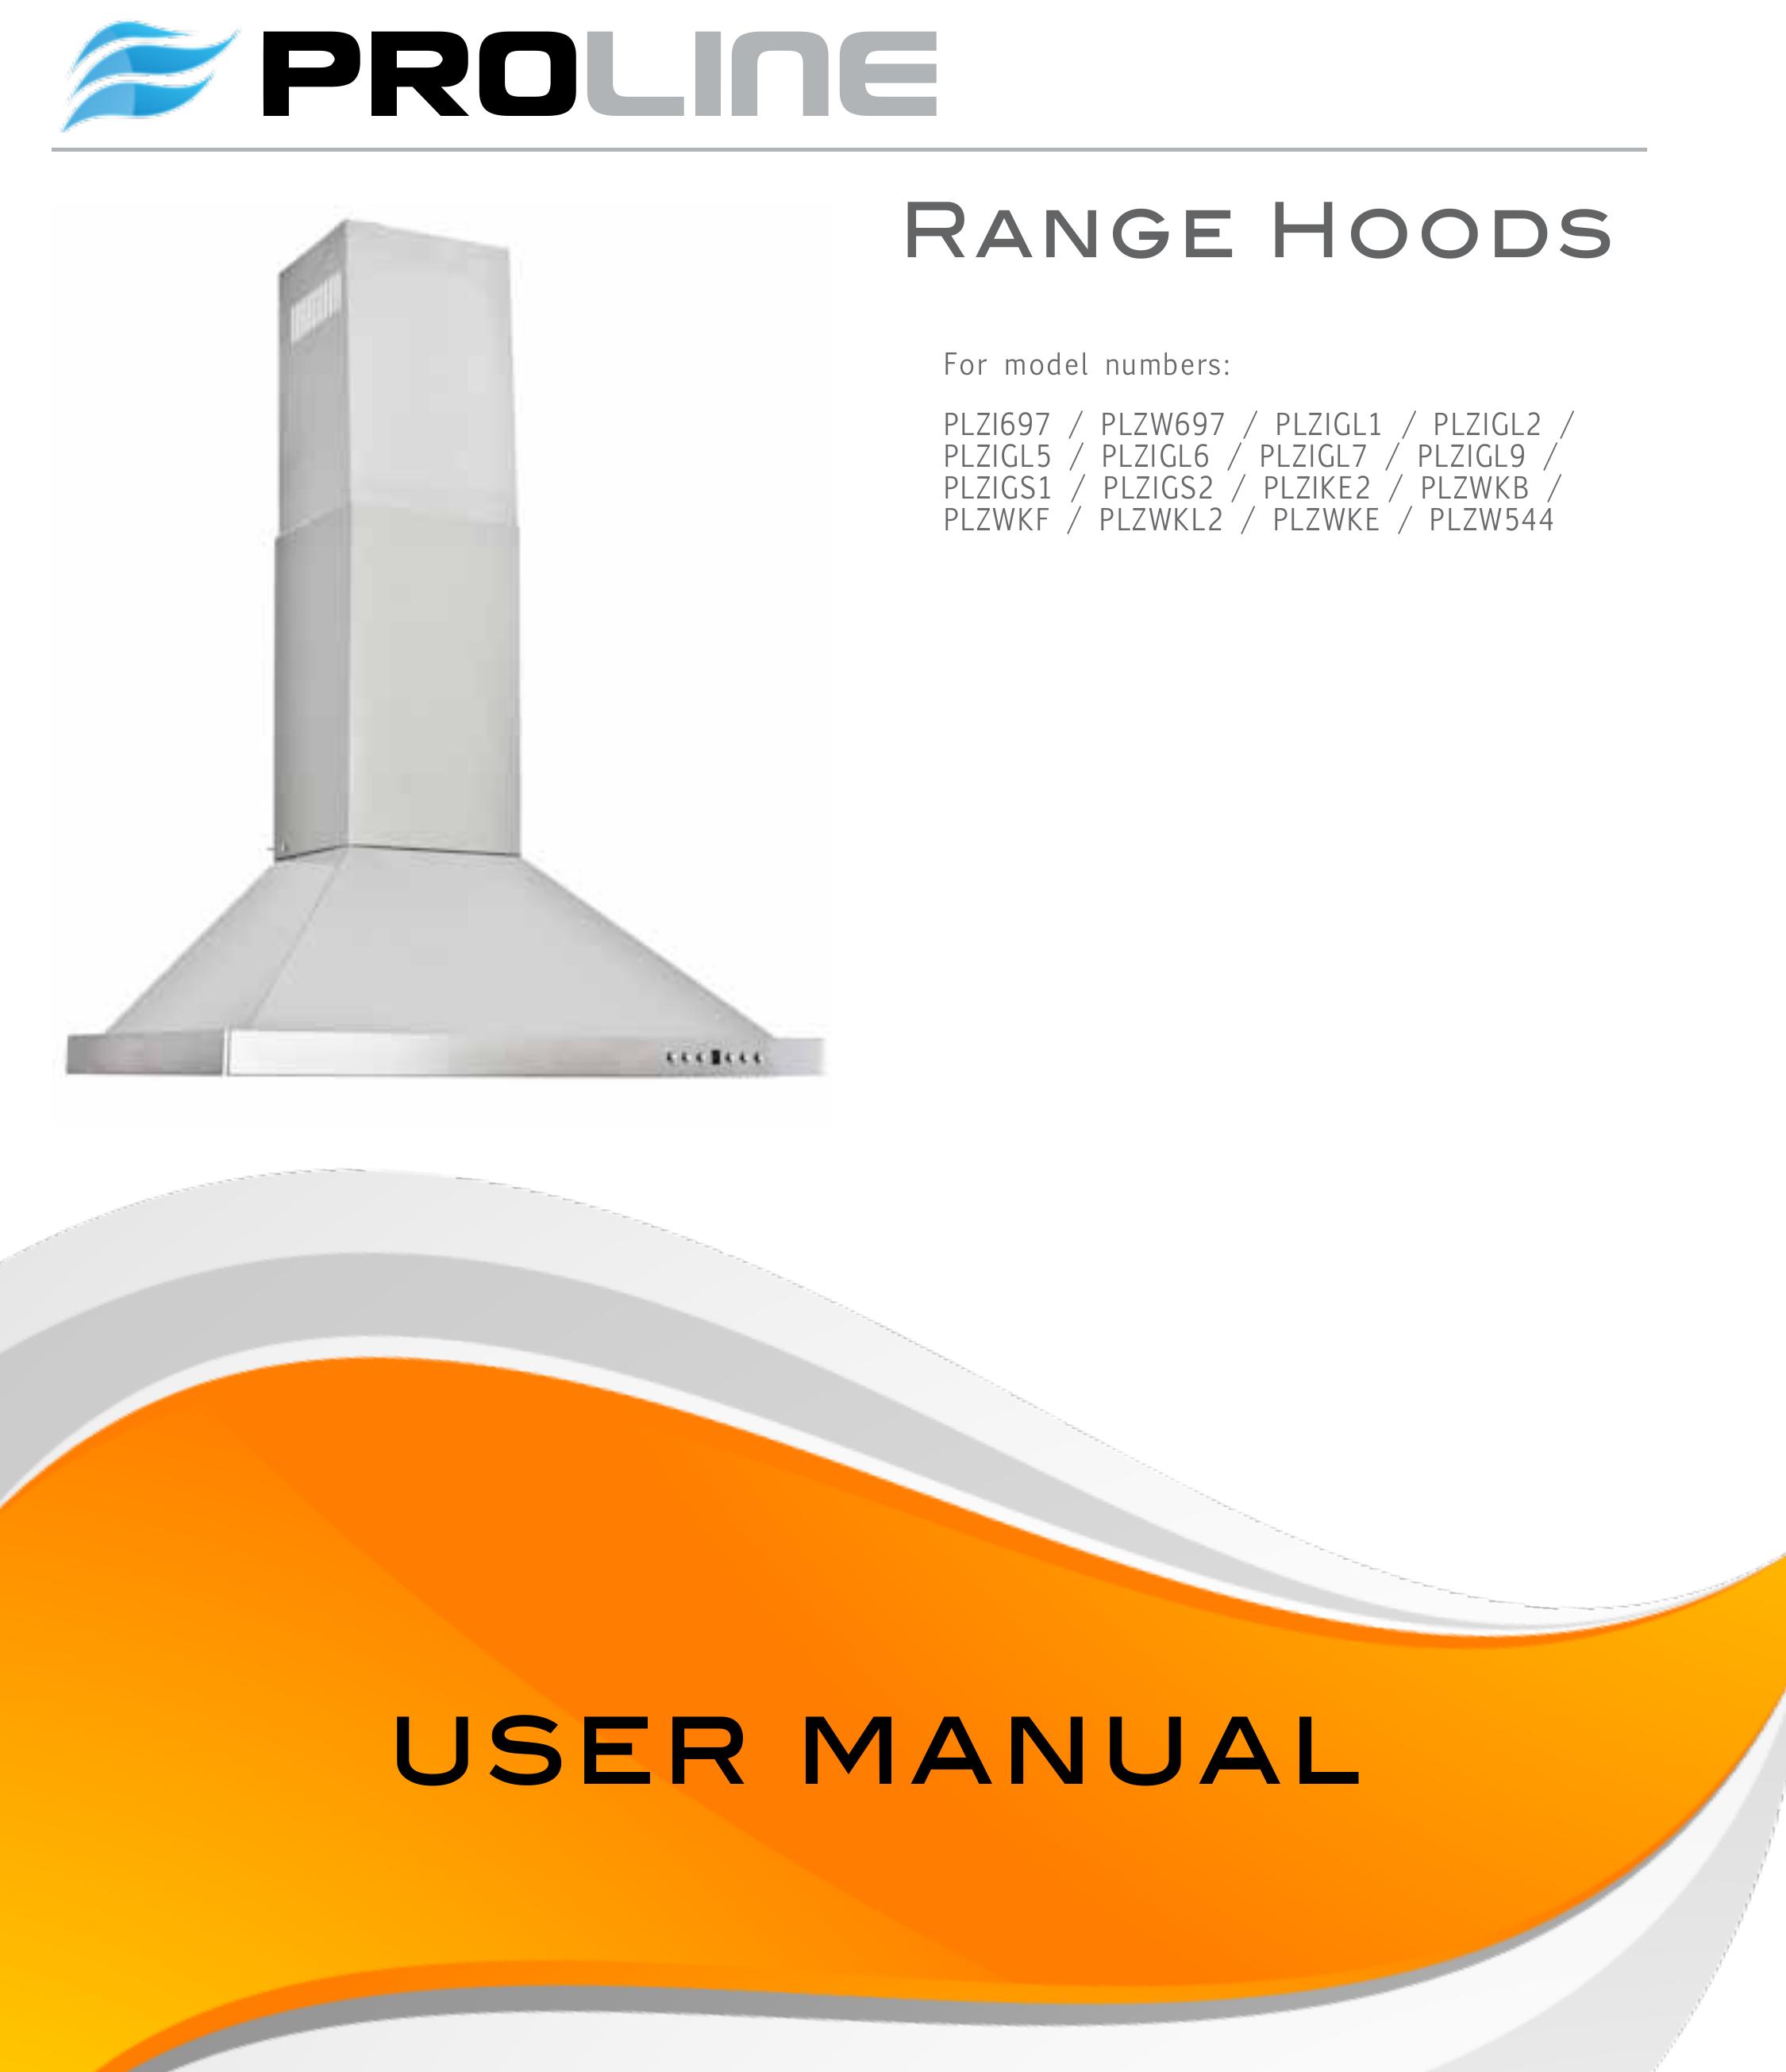 Proline PLZW544 Ventilation Hood User Manual